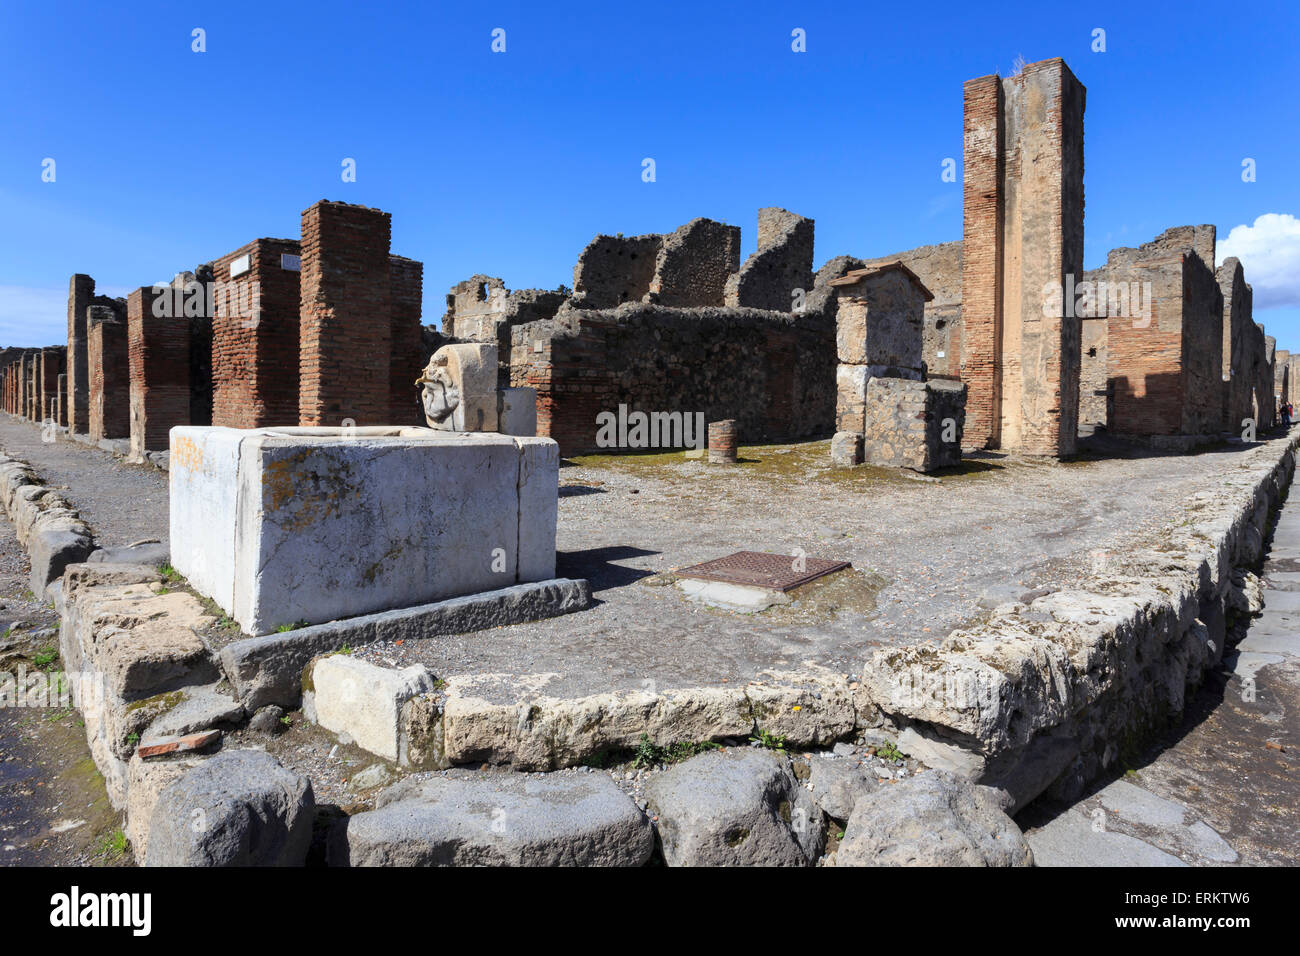 Street corner with public fountain, Roman ruins of Pompeii, UNESCO World Heritage Site, Campania, Italy, Europe Stock Photo